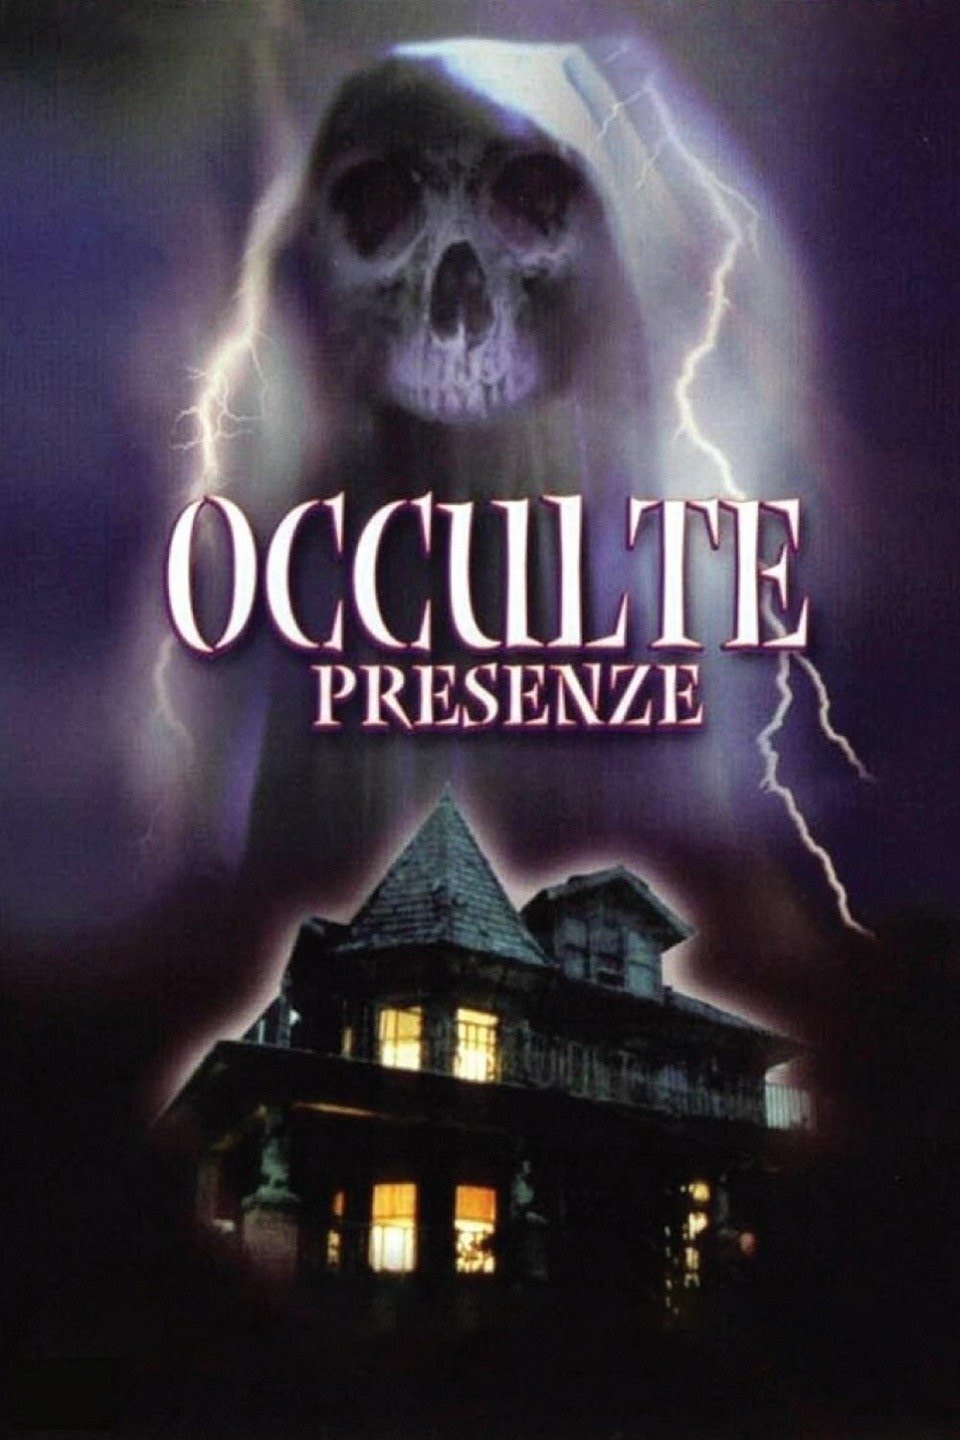 Occulte presenze (2002)